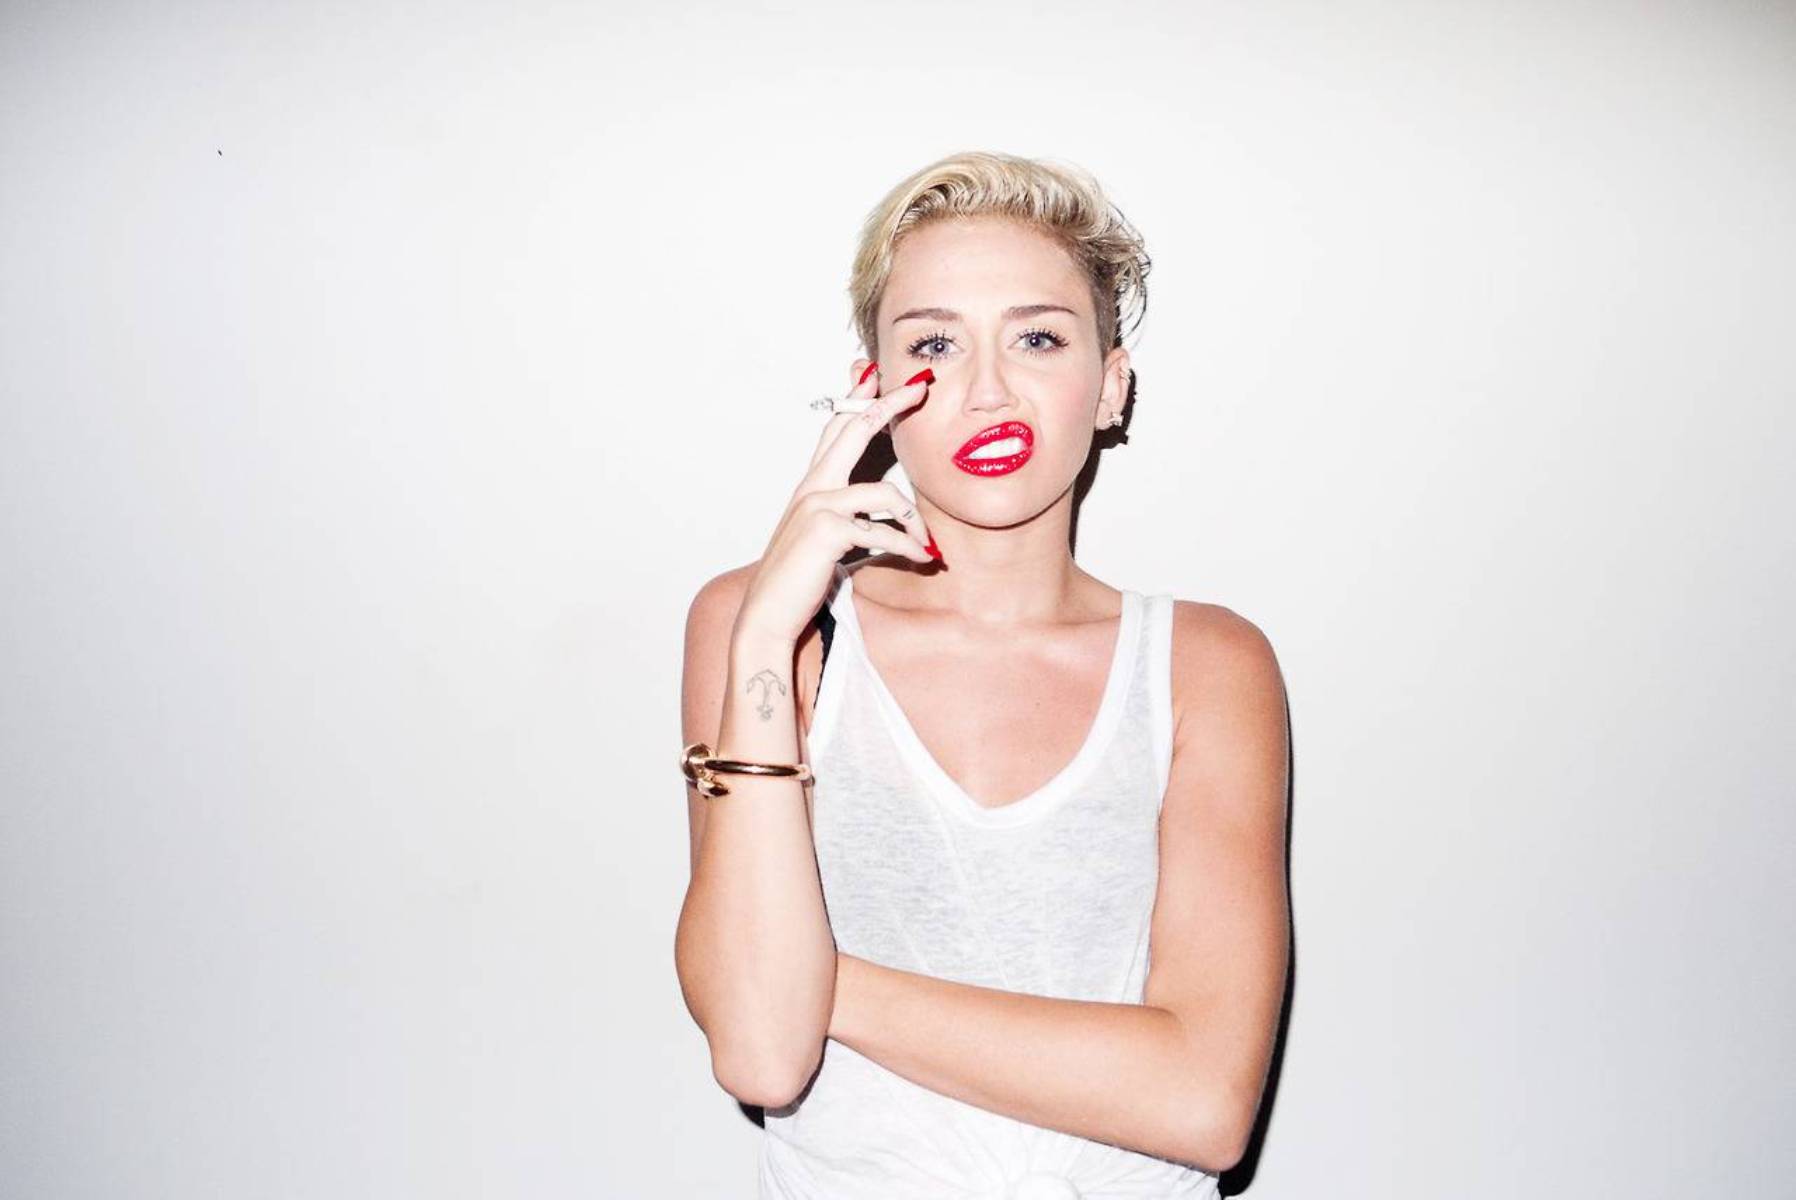 Cool Miley Cyrus Wallpaper HD 2014 Wallpaper